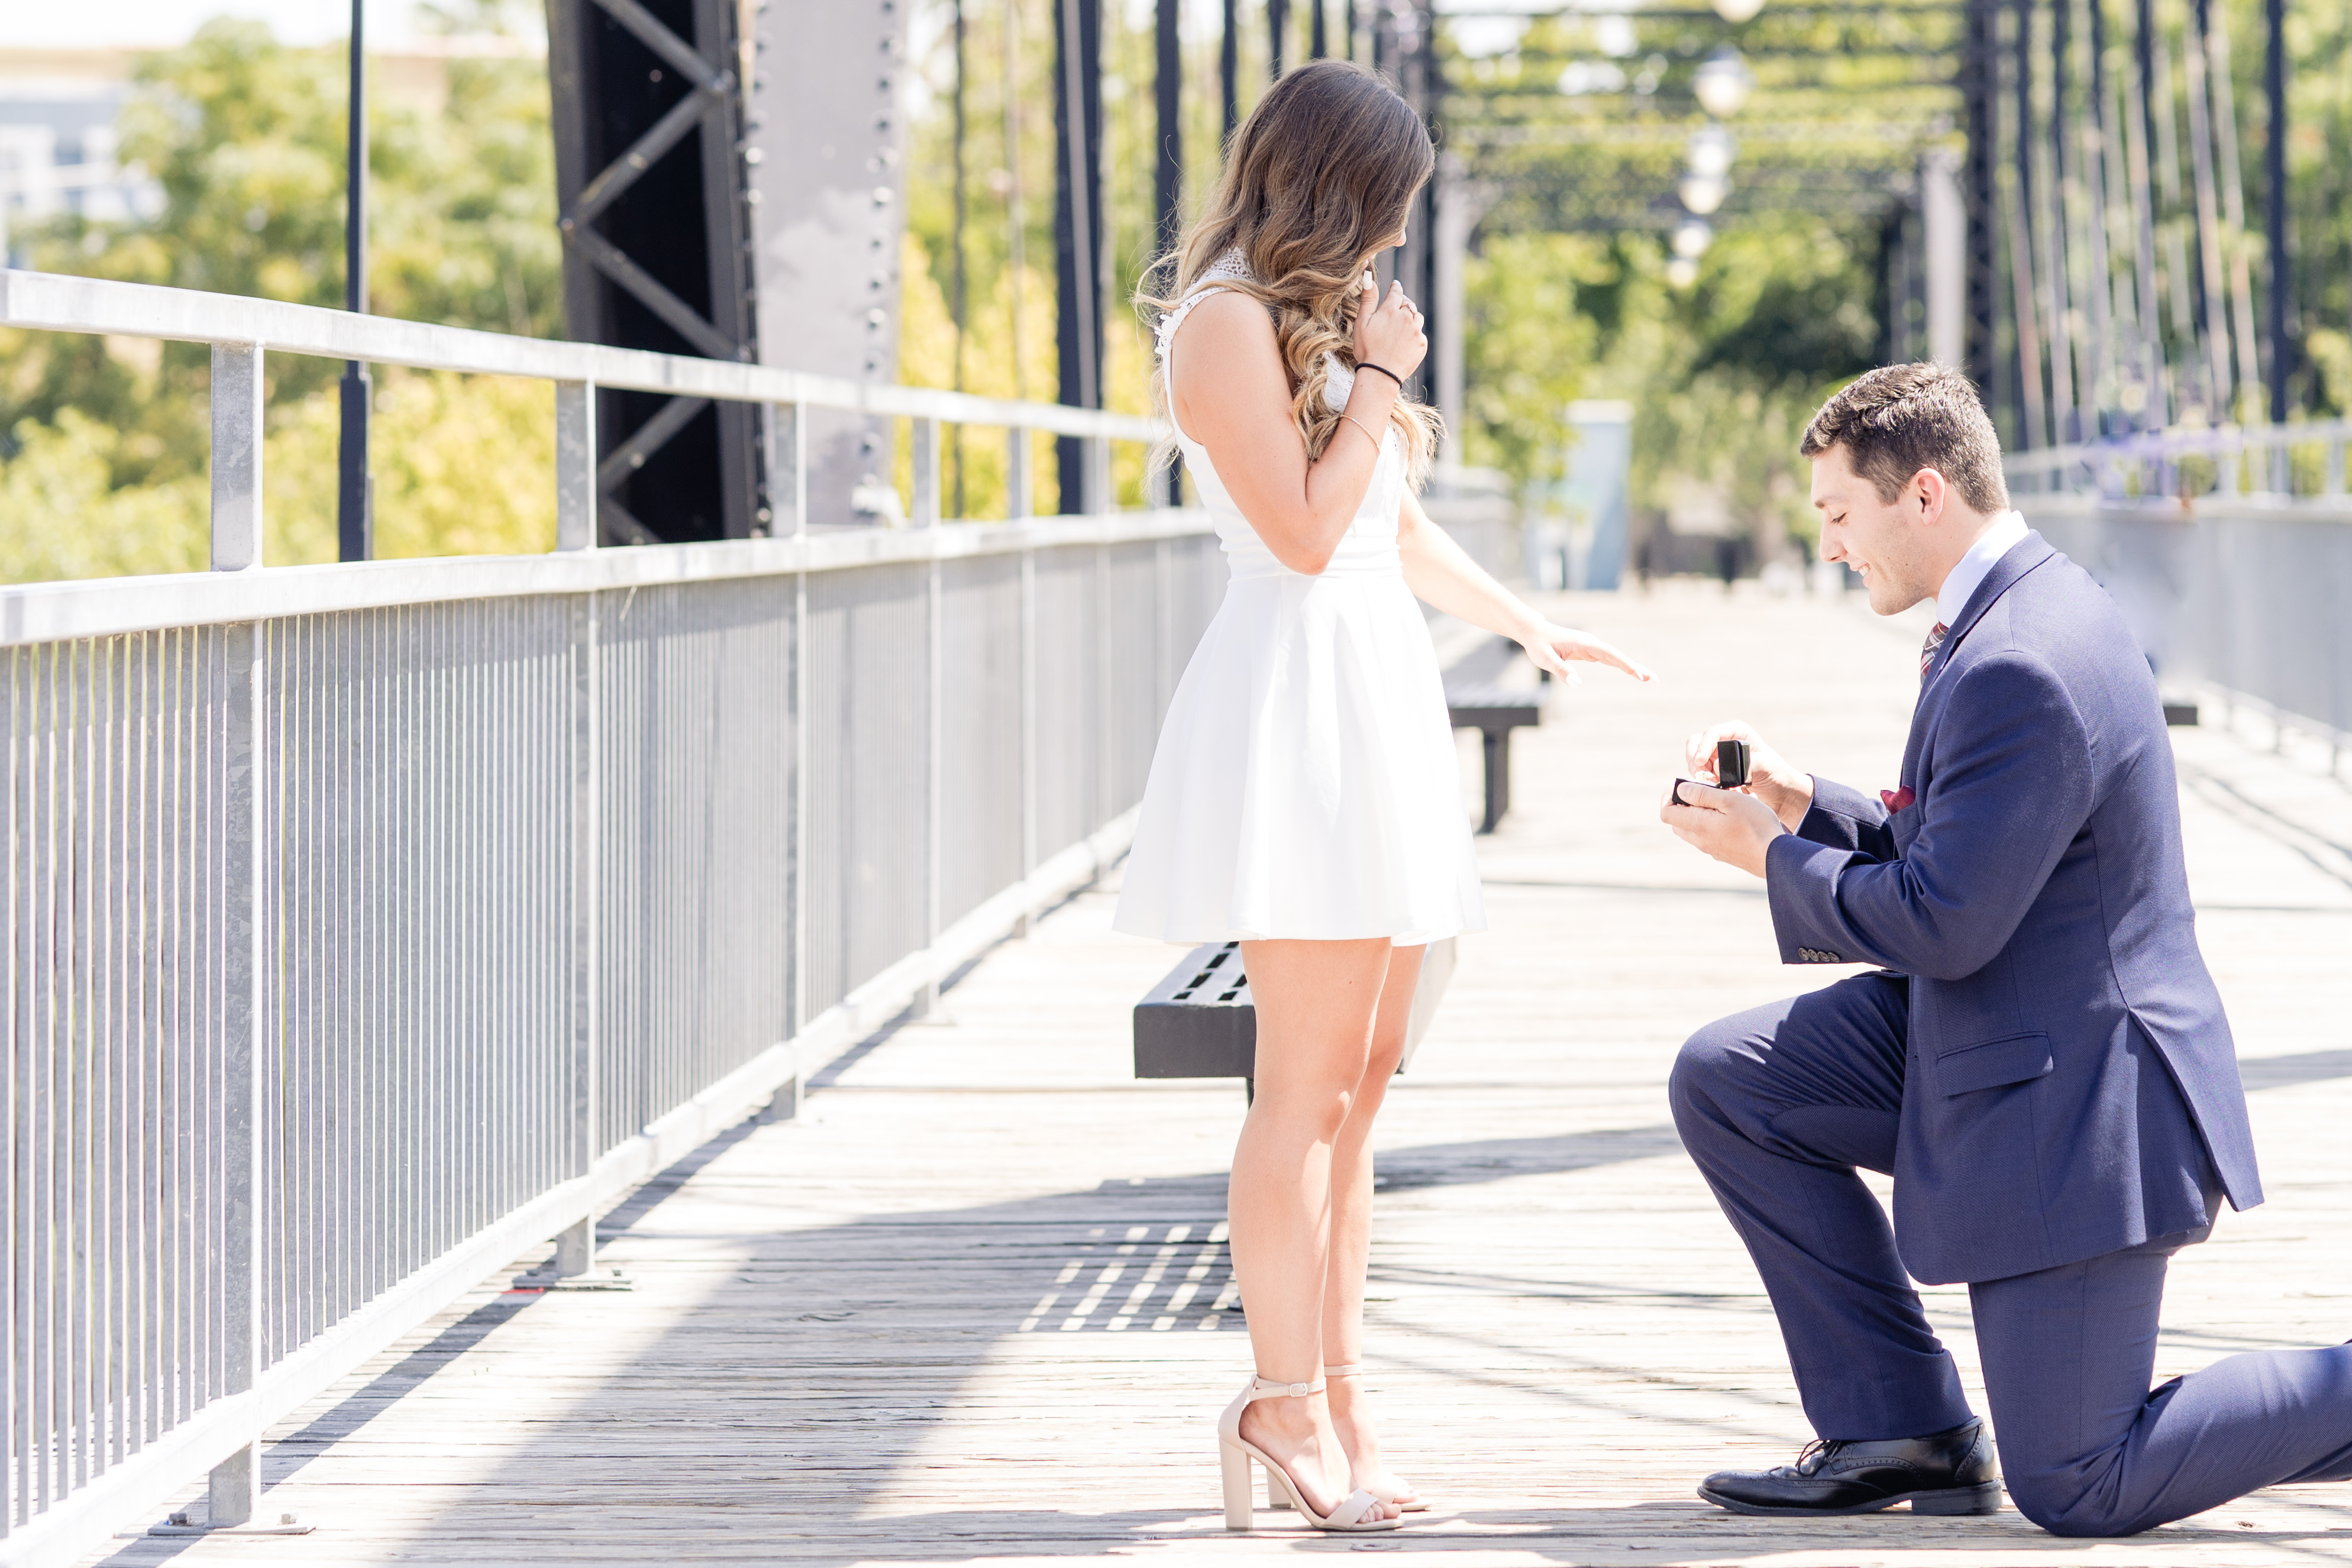 Faust St. Bridge wedding proposal in New Braunfels Texas